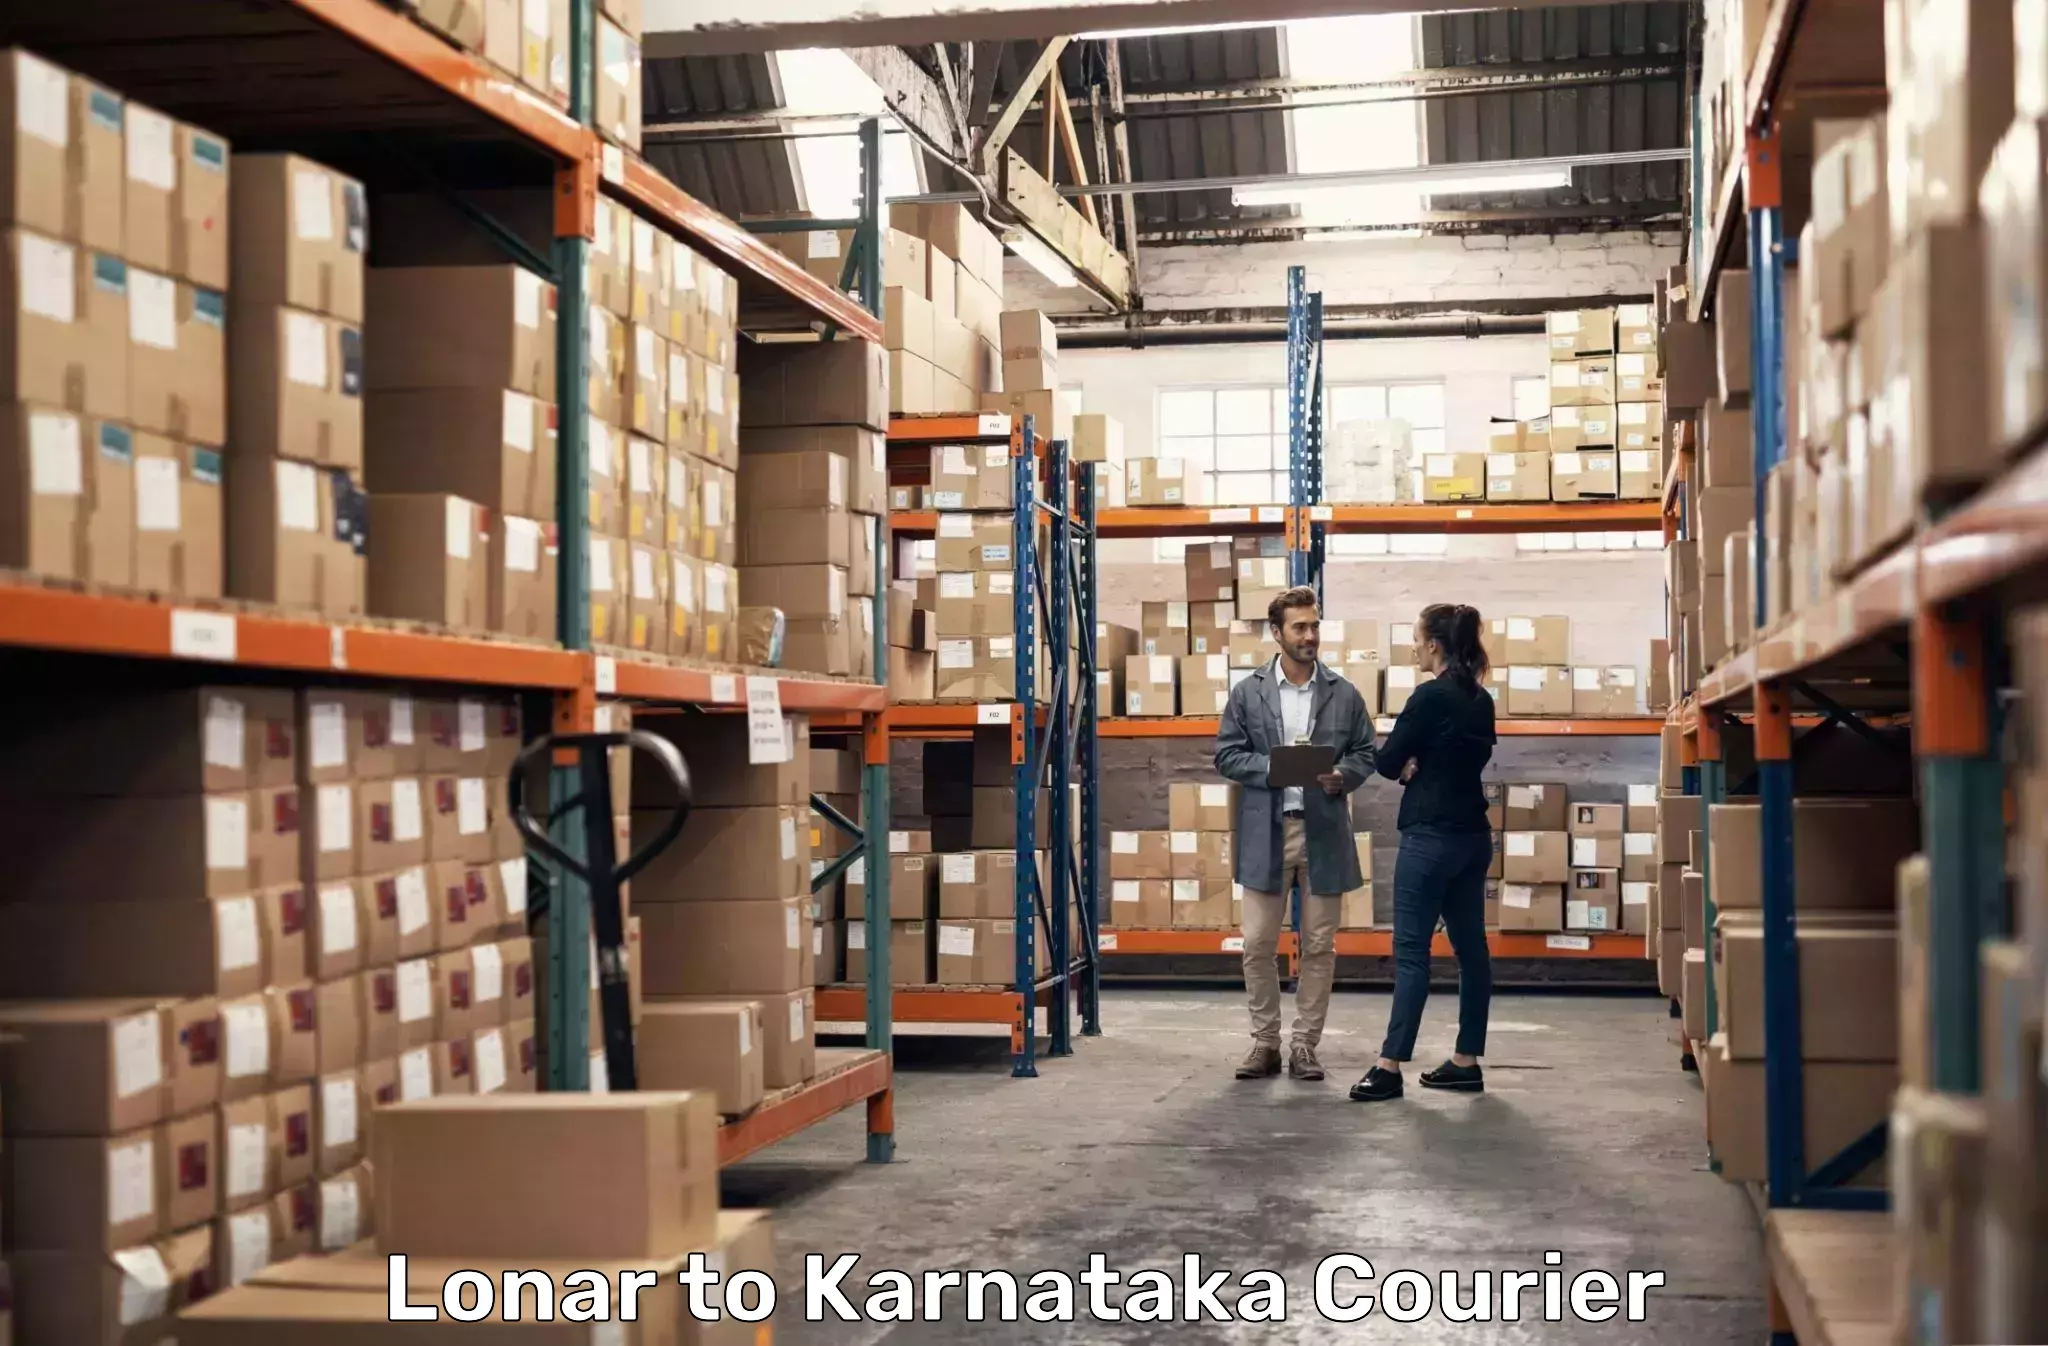 Courier service comparison in Lonar to Basavanagudi